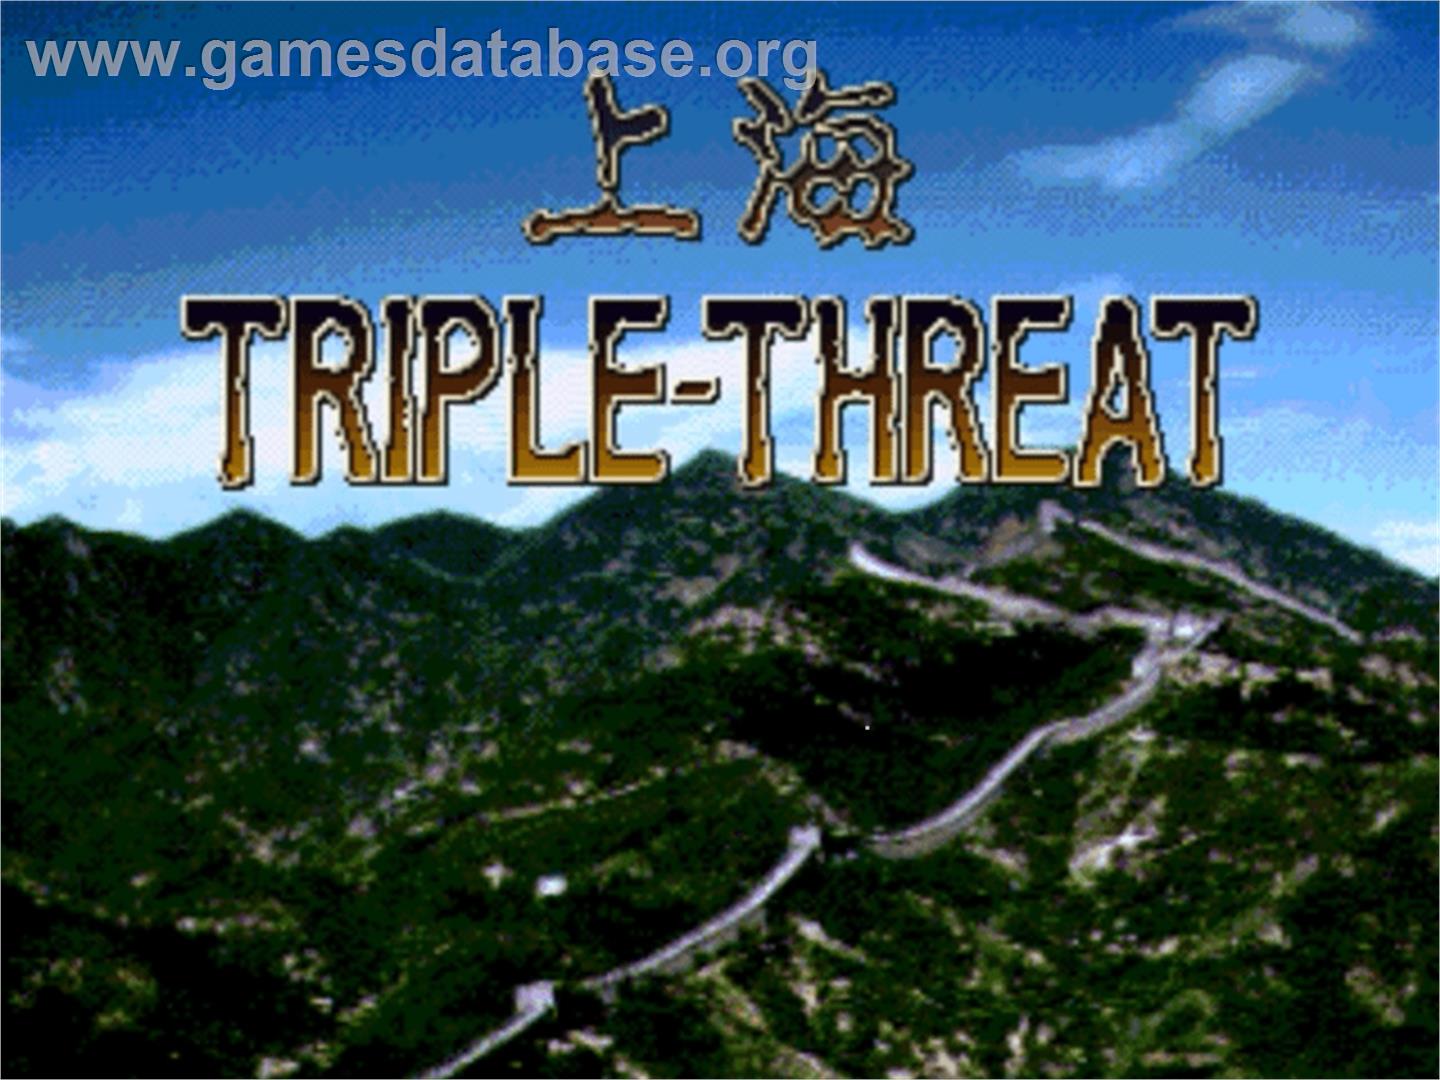 Shanghai: Triple-Threat - Panasonic 3DO - Artwork - Title Screen